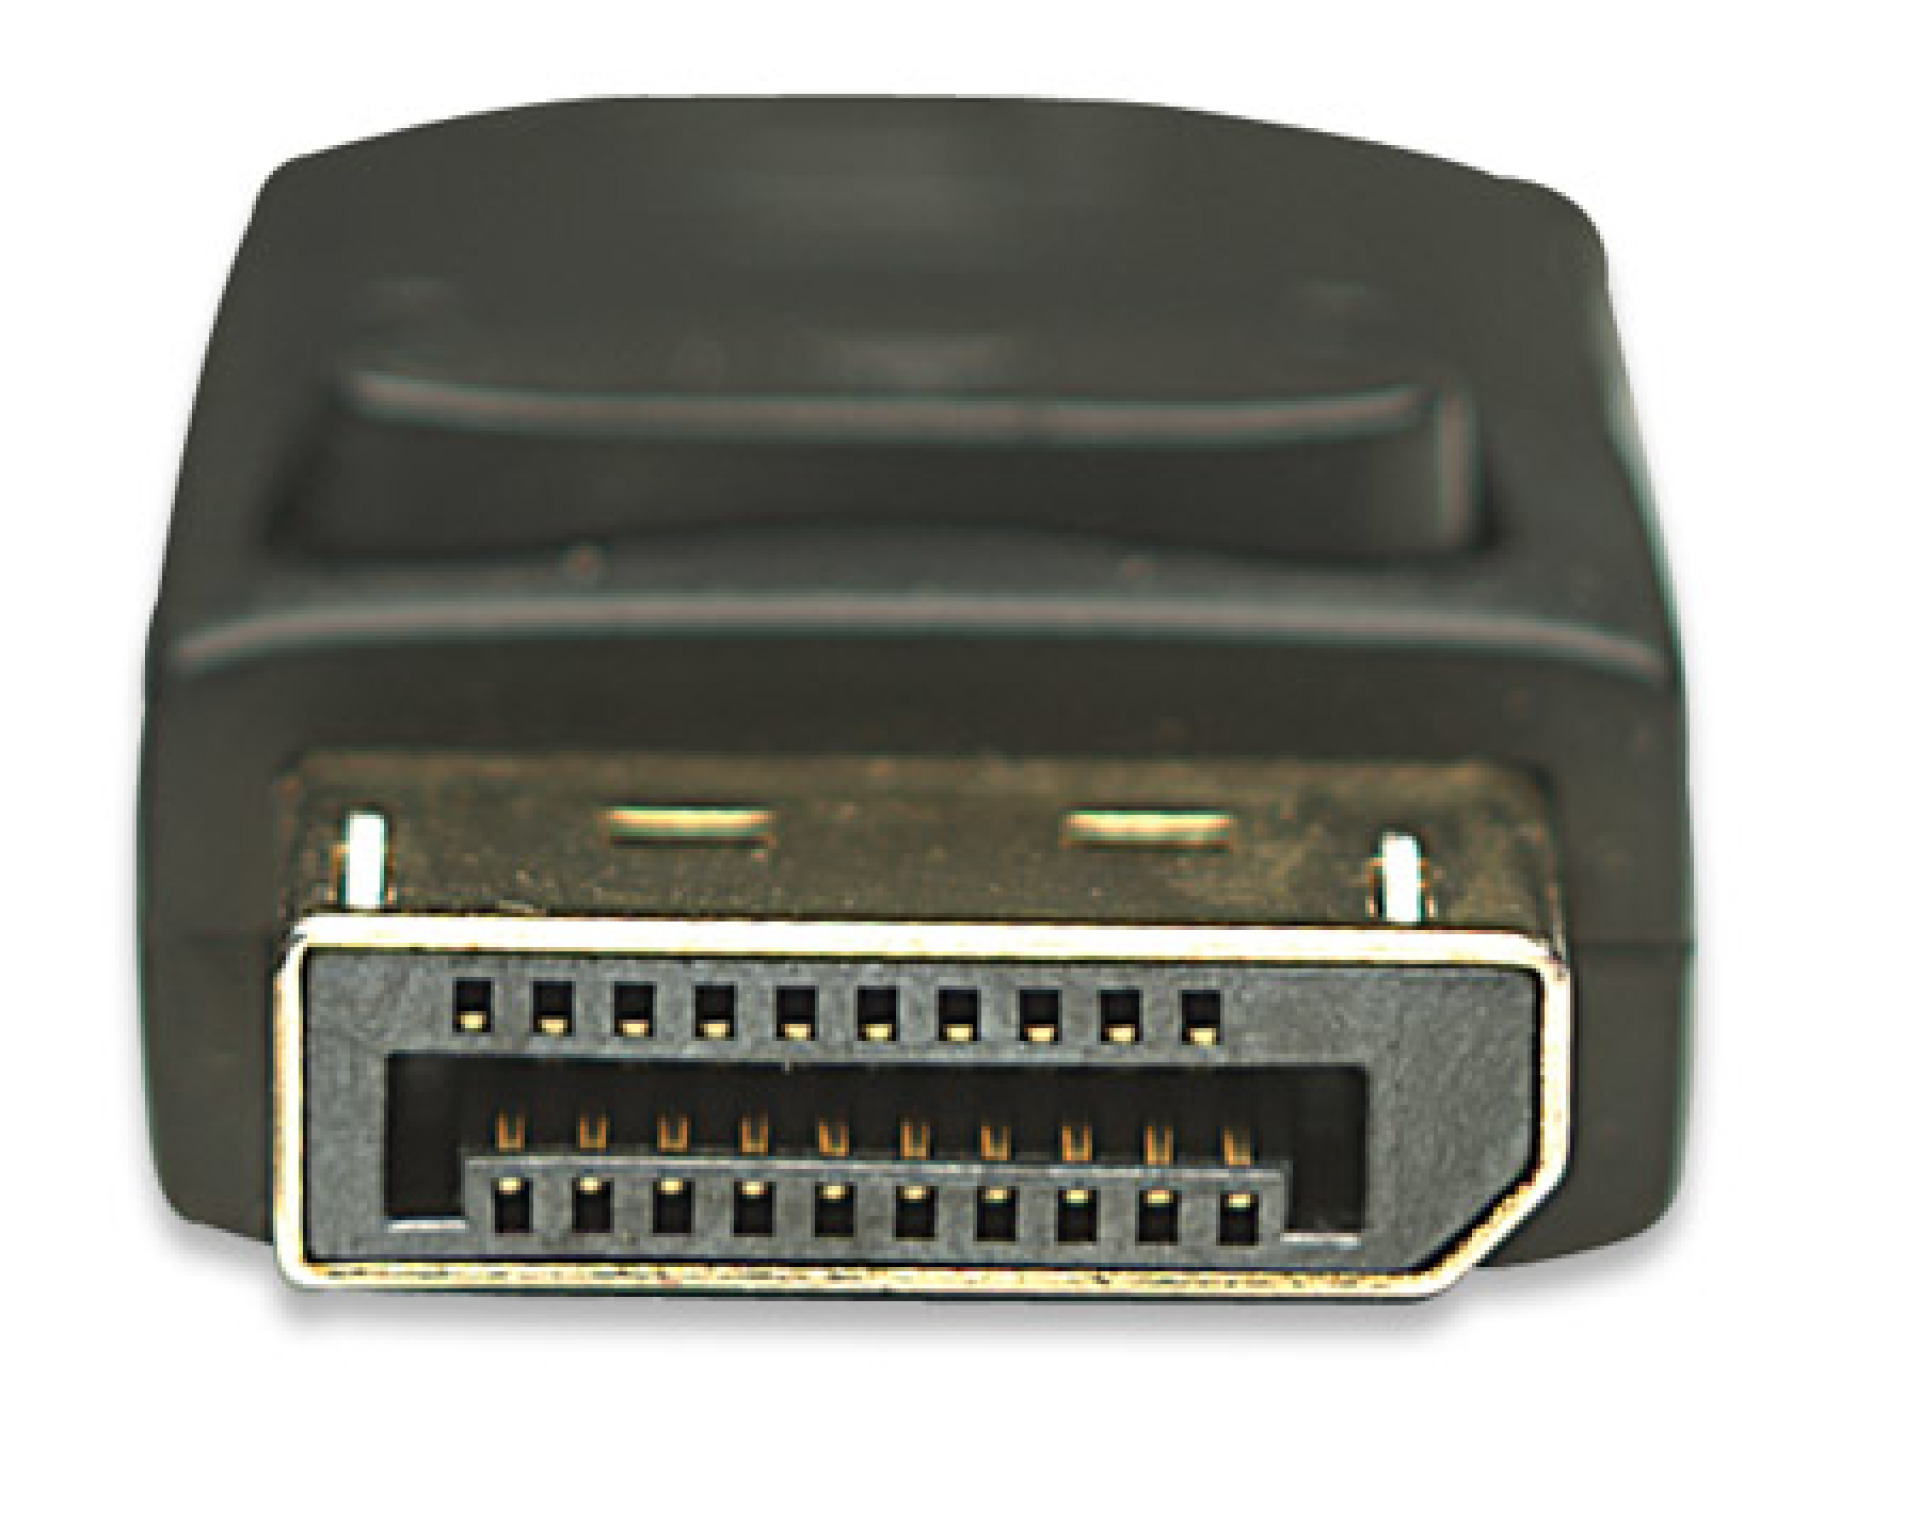 DisplayPort to VGA converter cable, black, 3 m